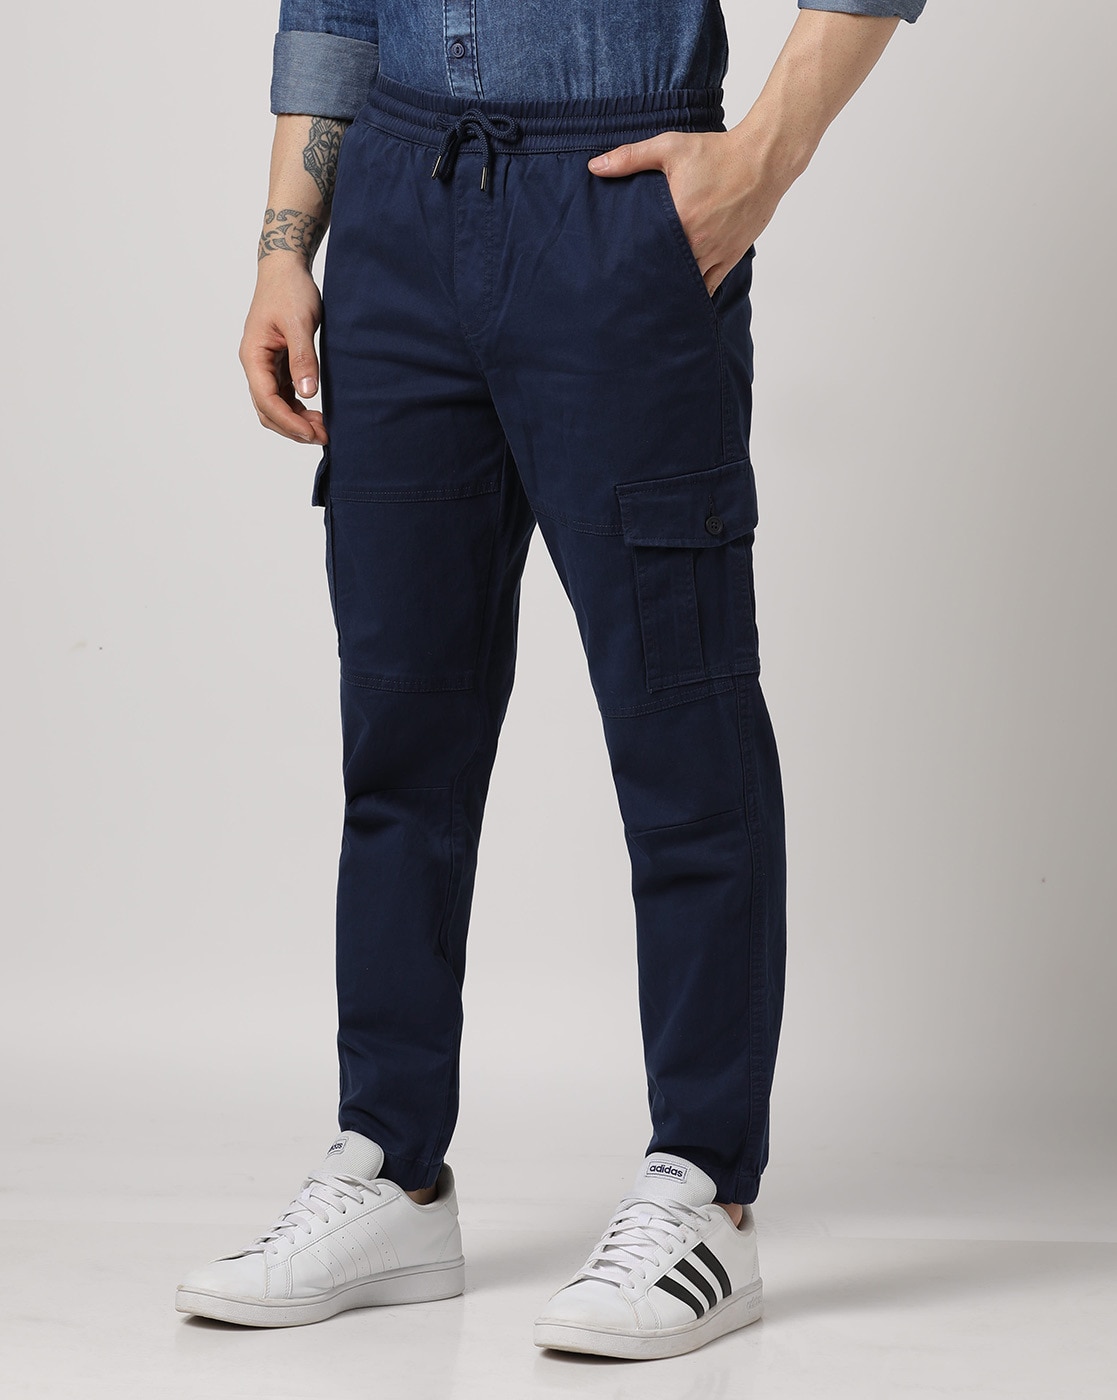 Buy tbase Mens Blue Solid Cargo Pants for Men Online India